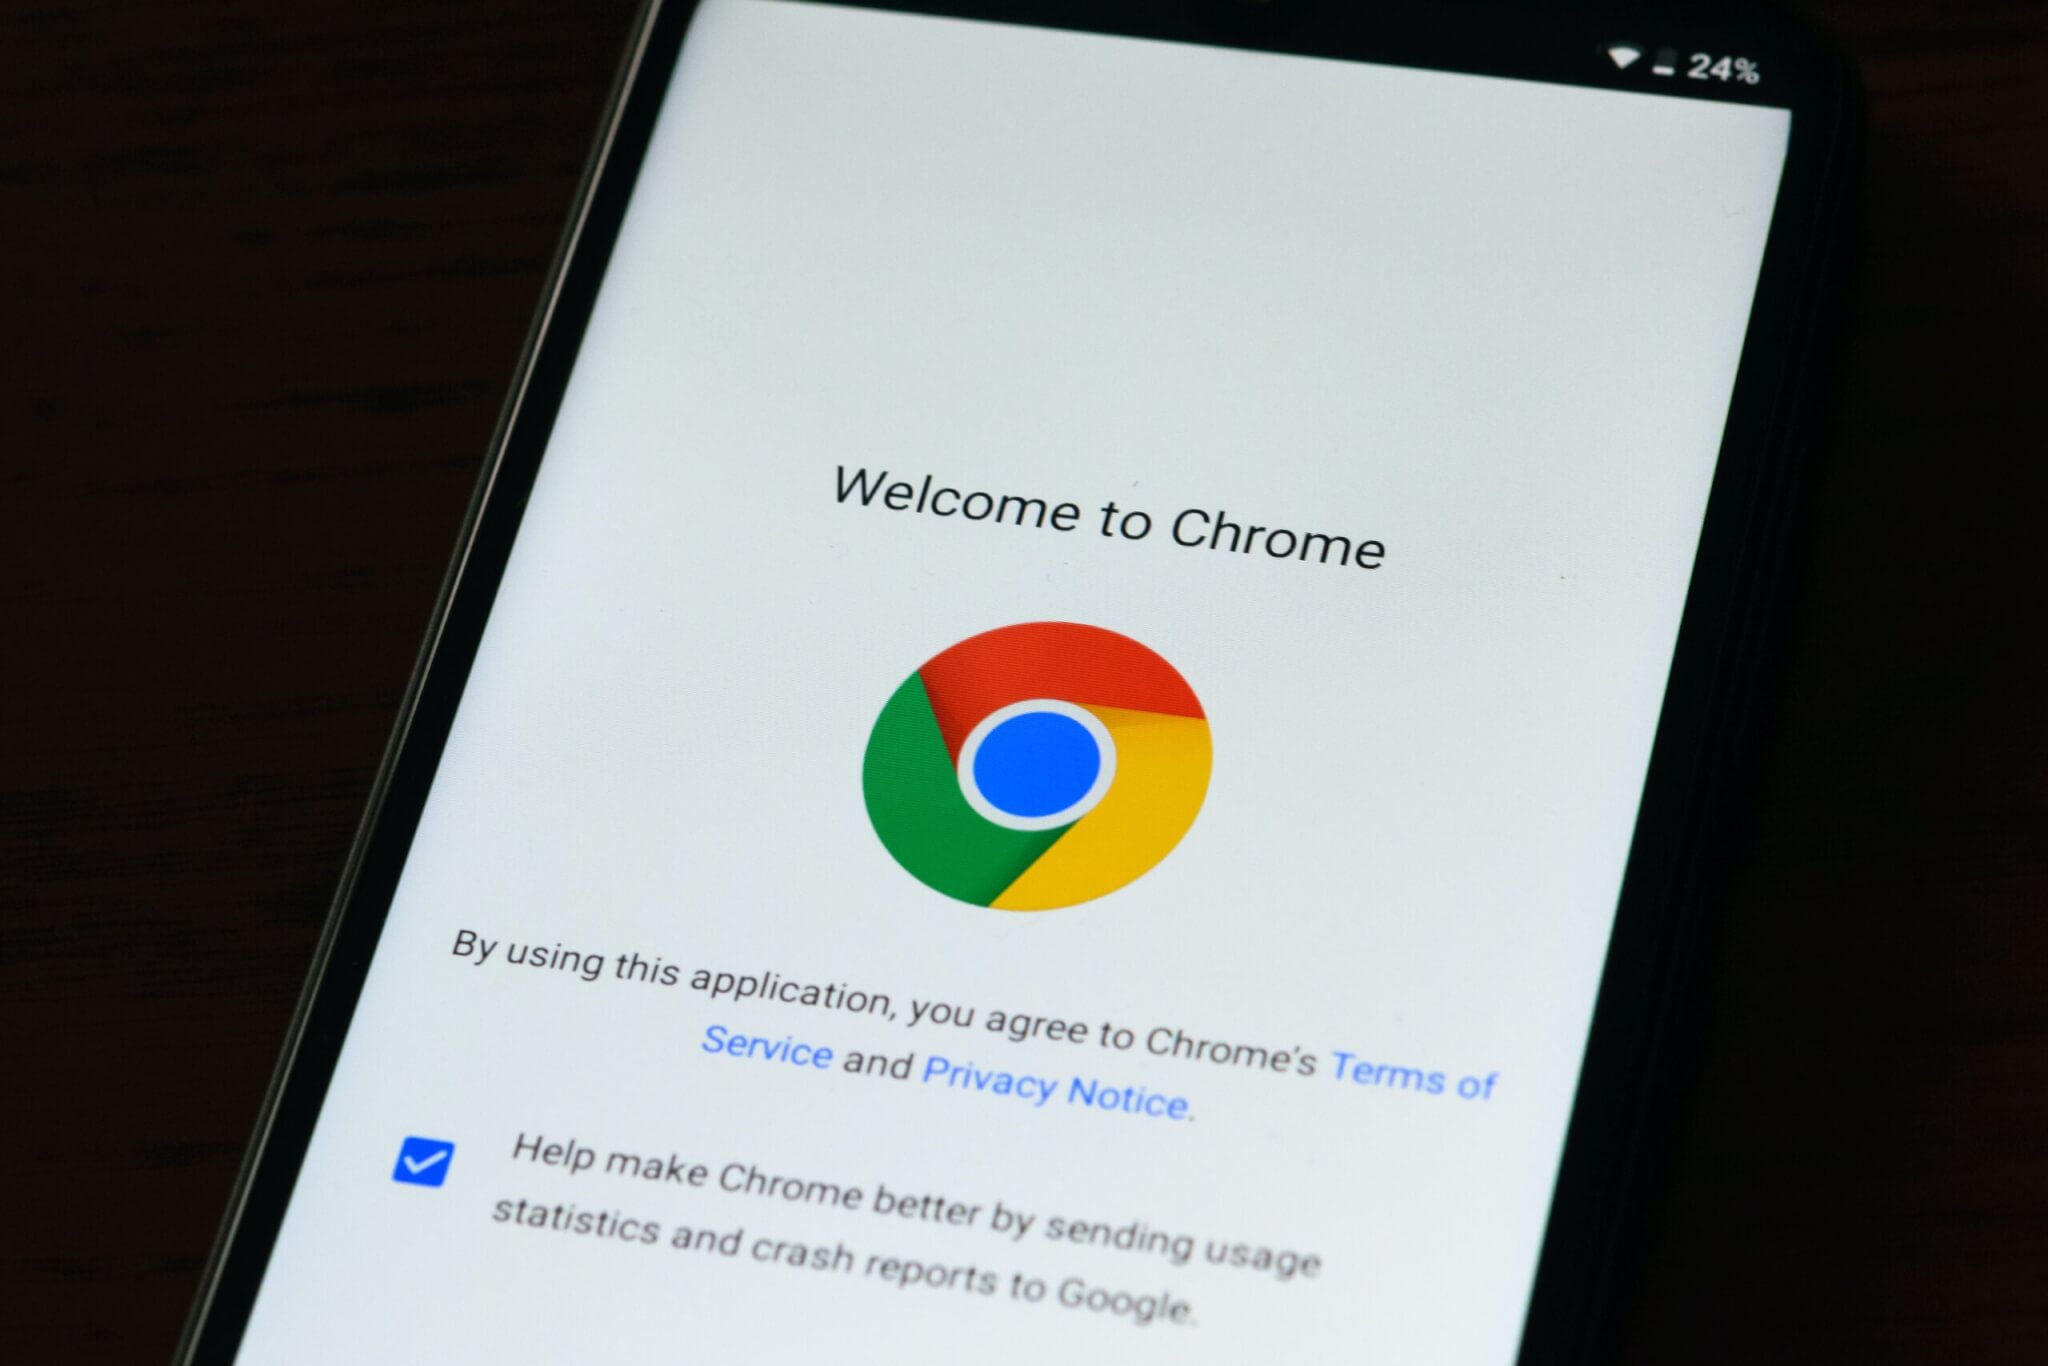 Google Chrome app on smartphone